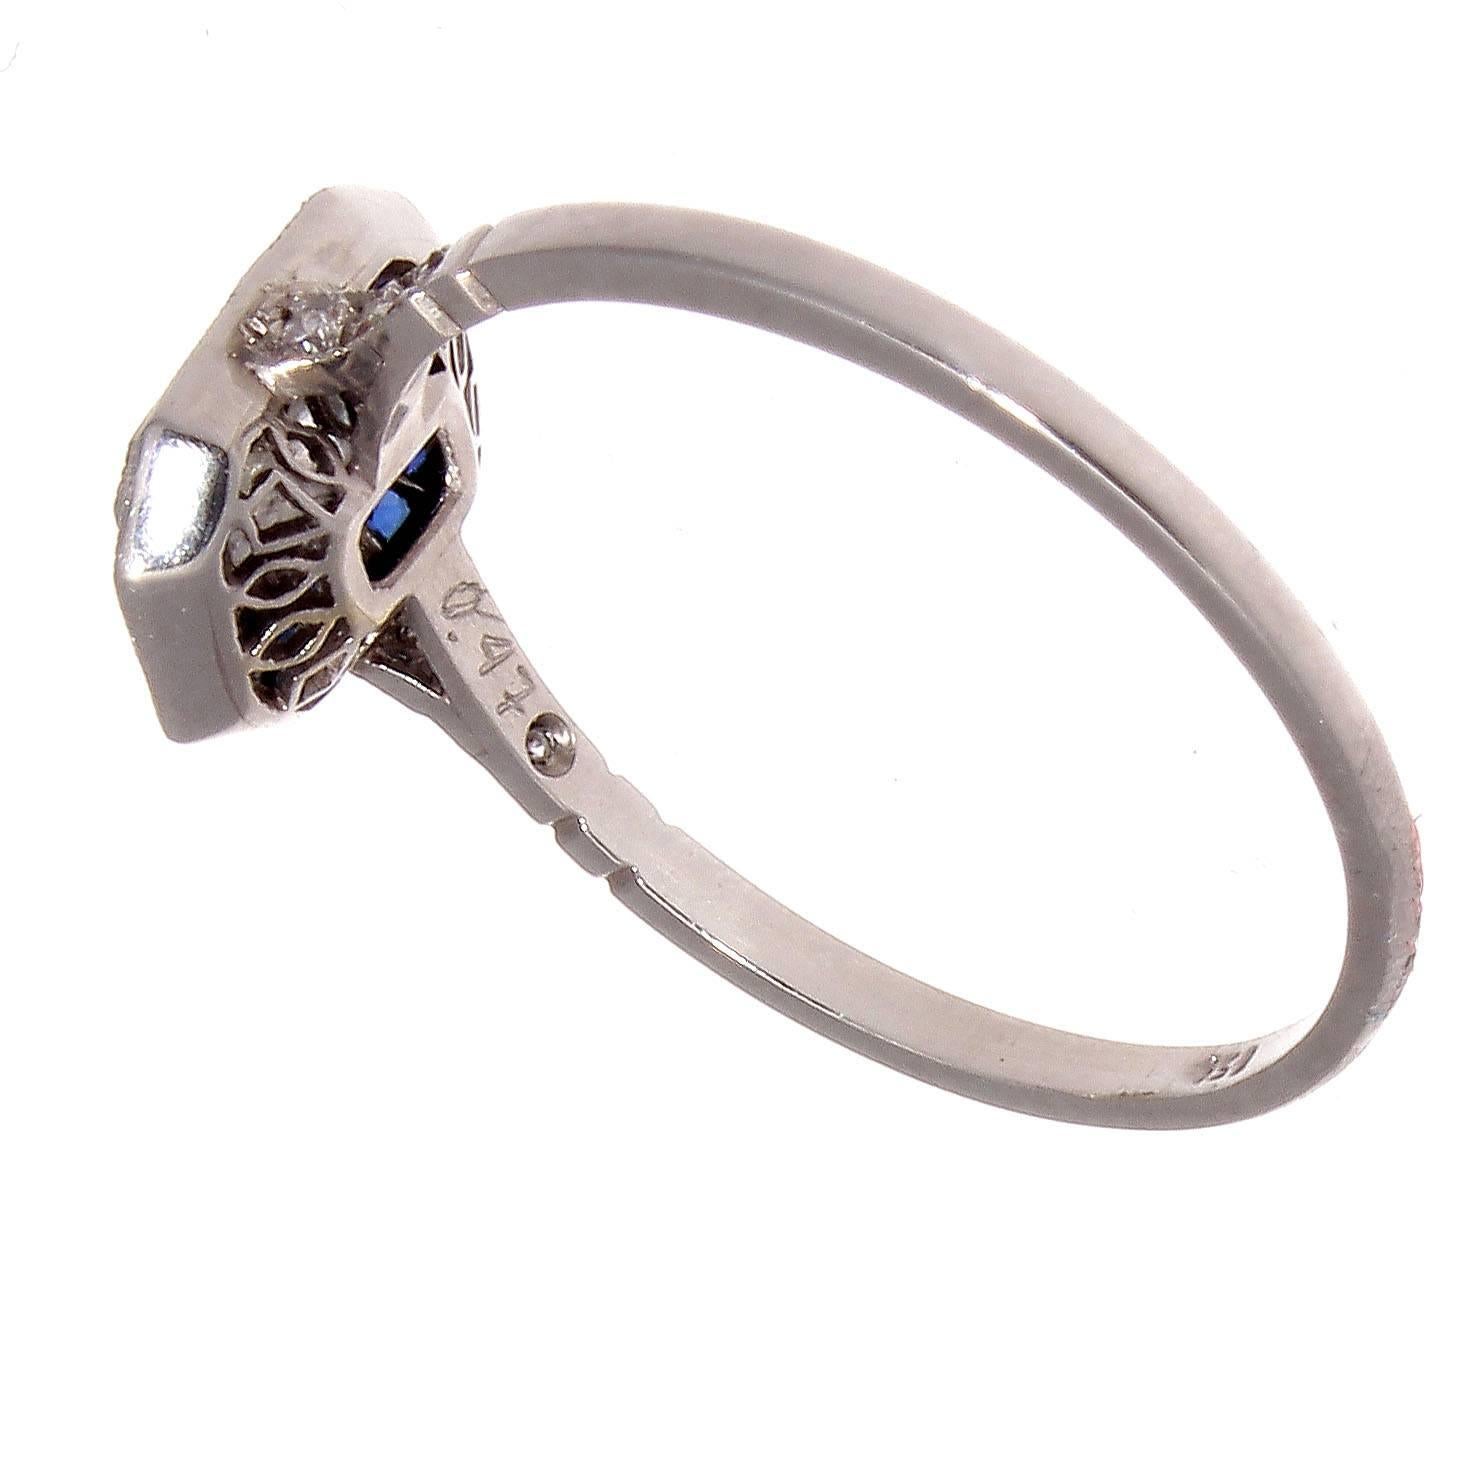 Art Deco Sapphire Diamond Platinum Ring